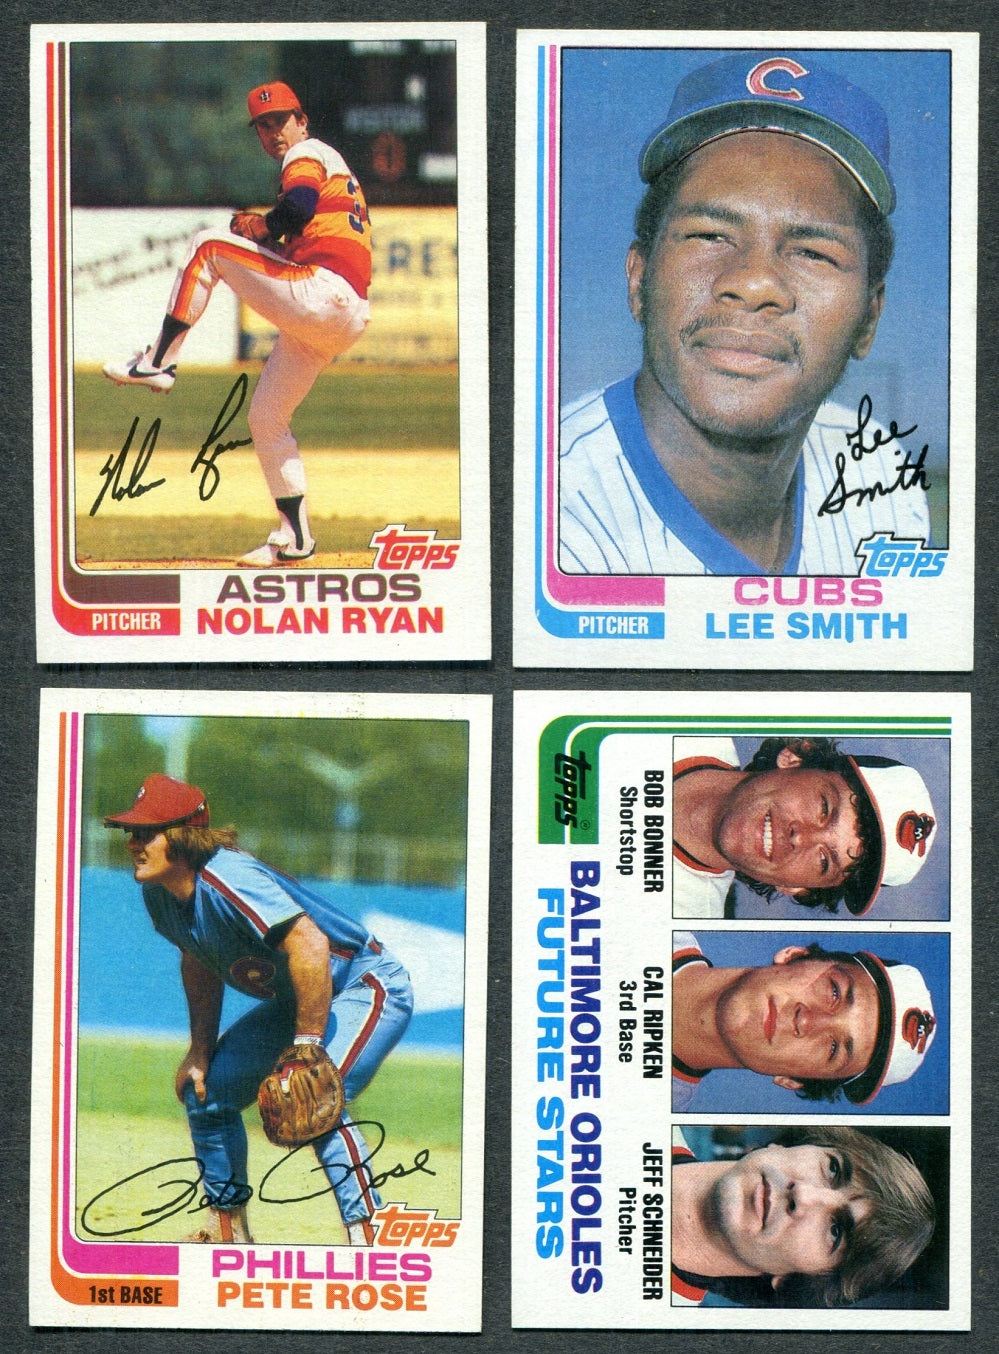 1982 Topps Baseball Complete Set NM NM/MT (792) (23-223)